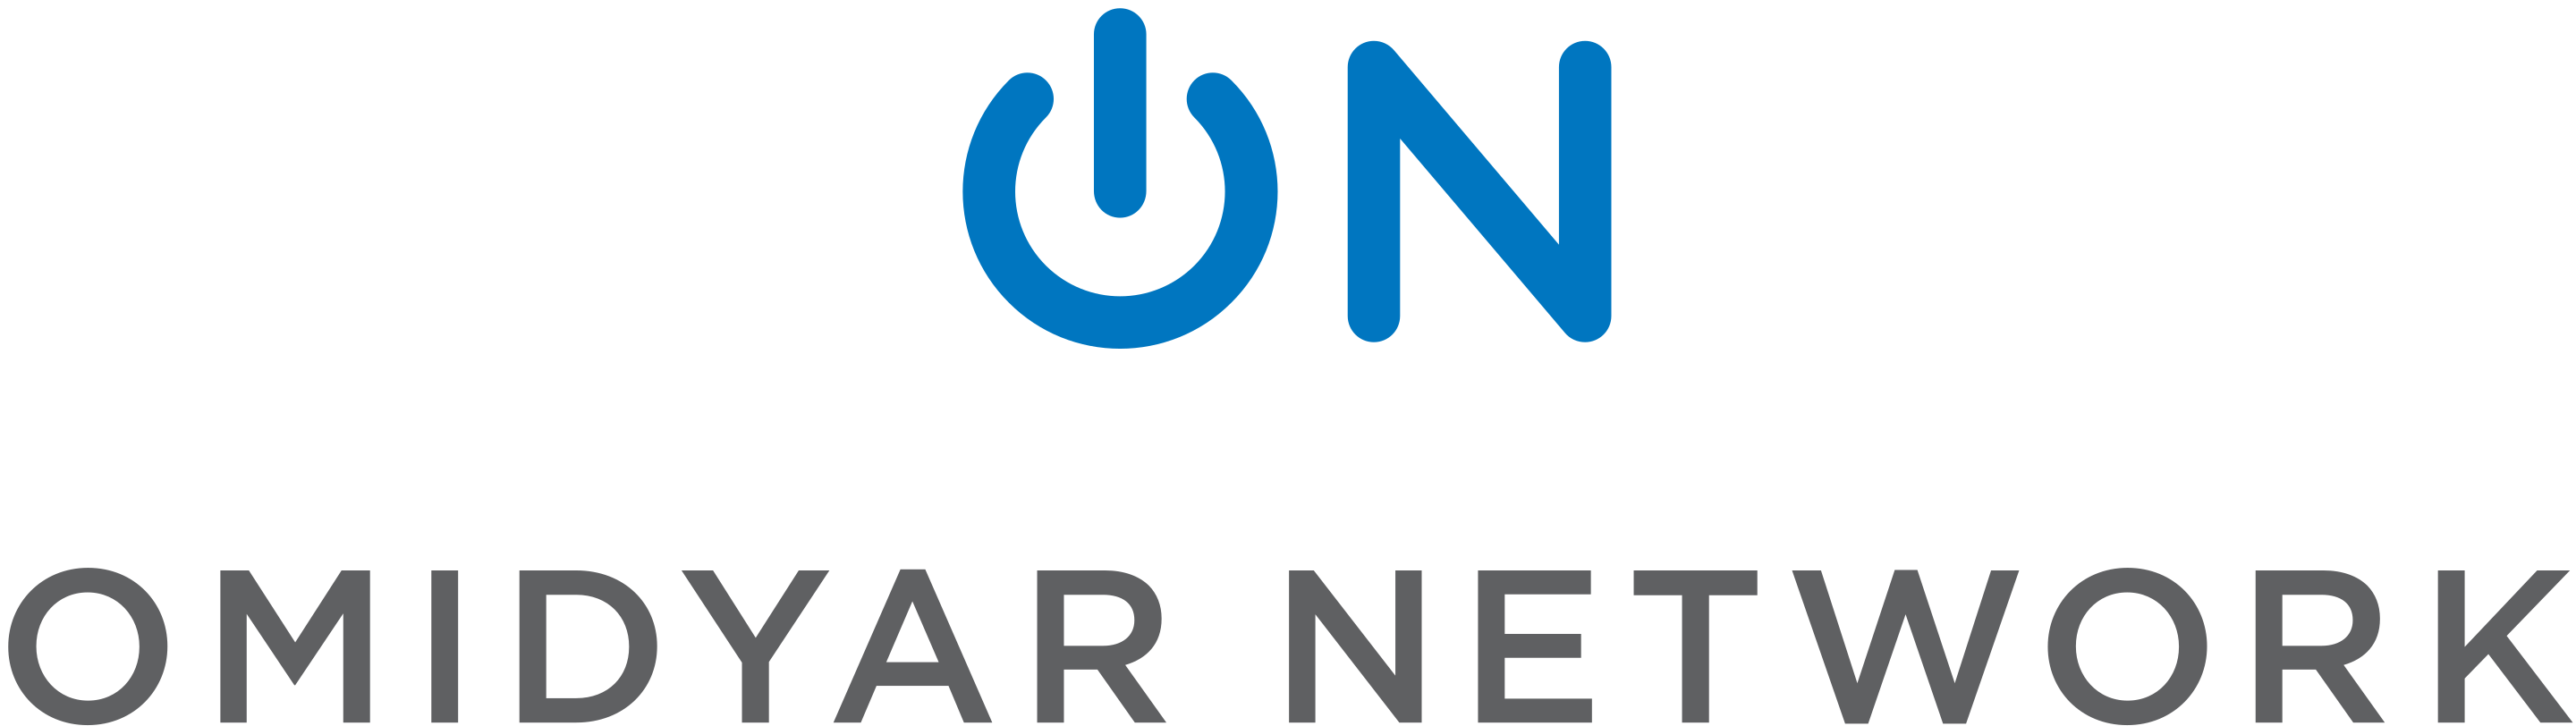 Omidyar Network wordmark